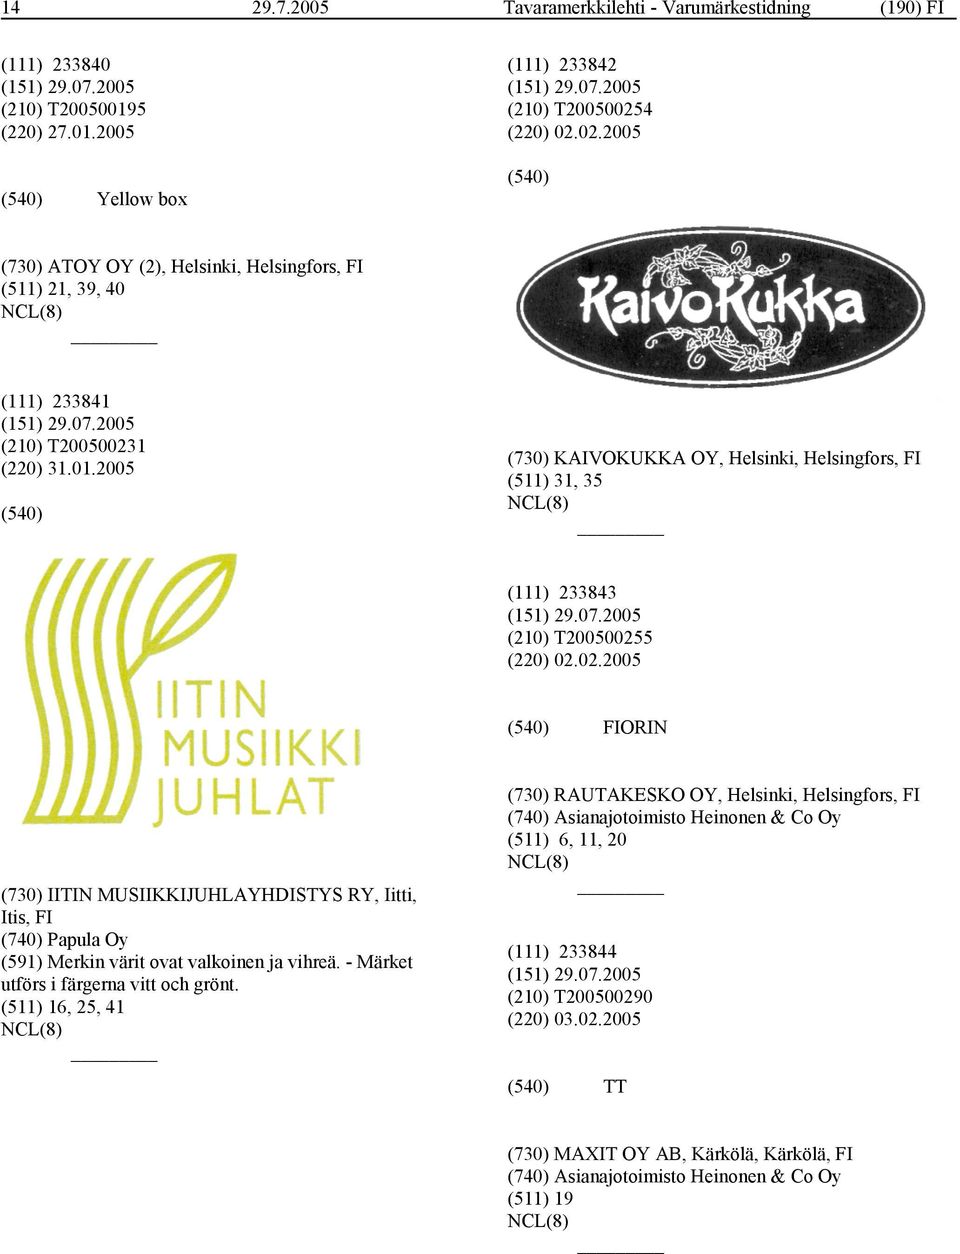 2005 (730) KAIVOKUKKA OY, Helsinki, Helsingfors, FI (511) 31, 35 (111) 233843 (210) T20050025